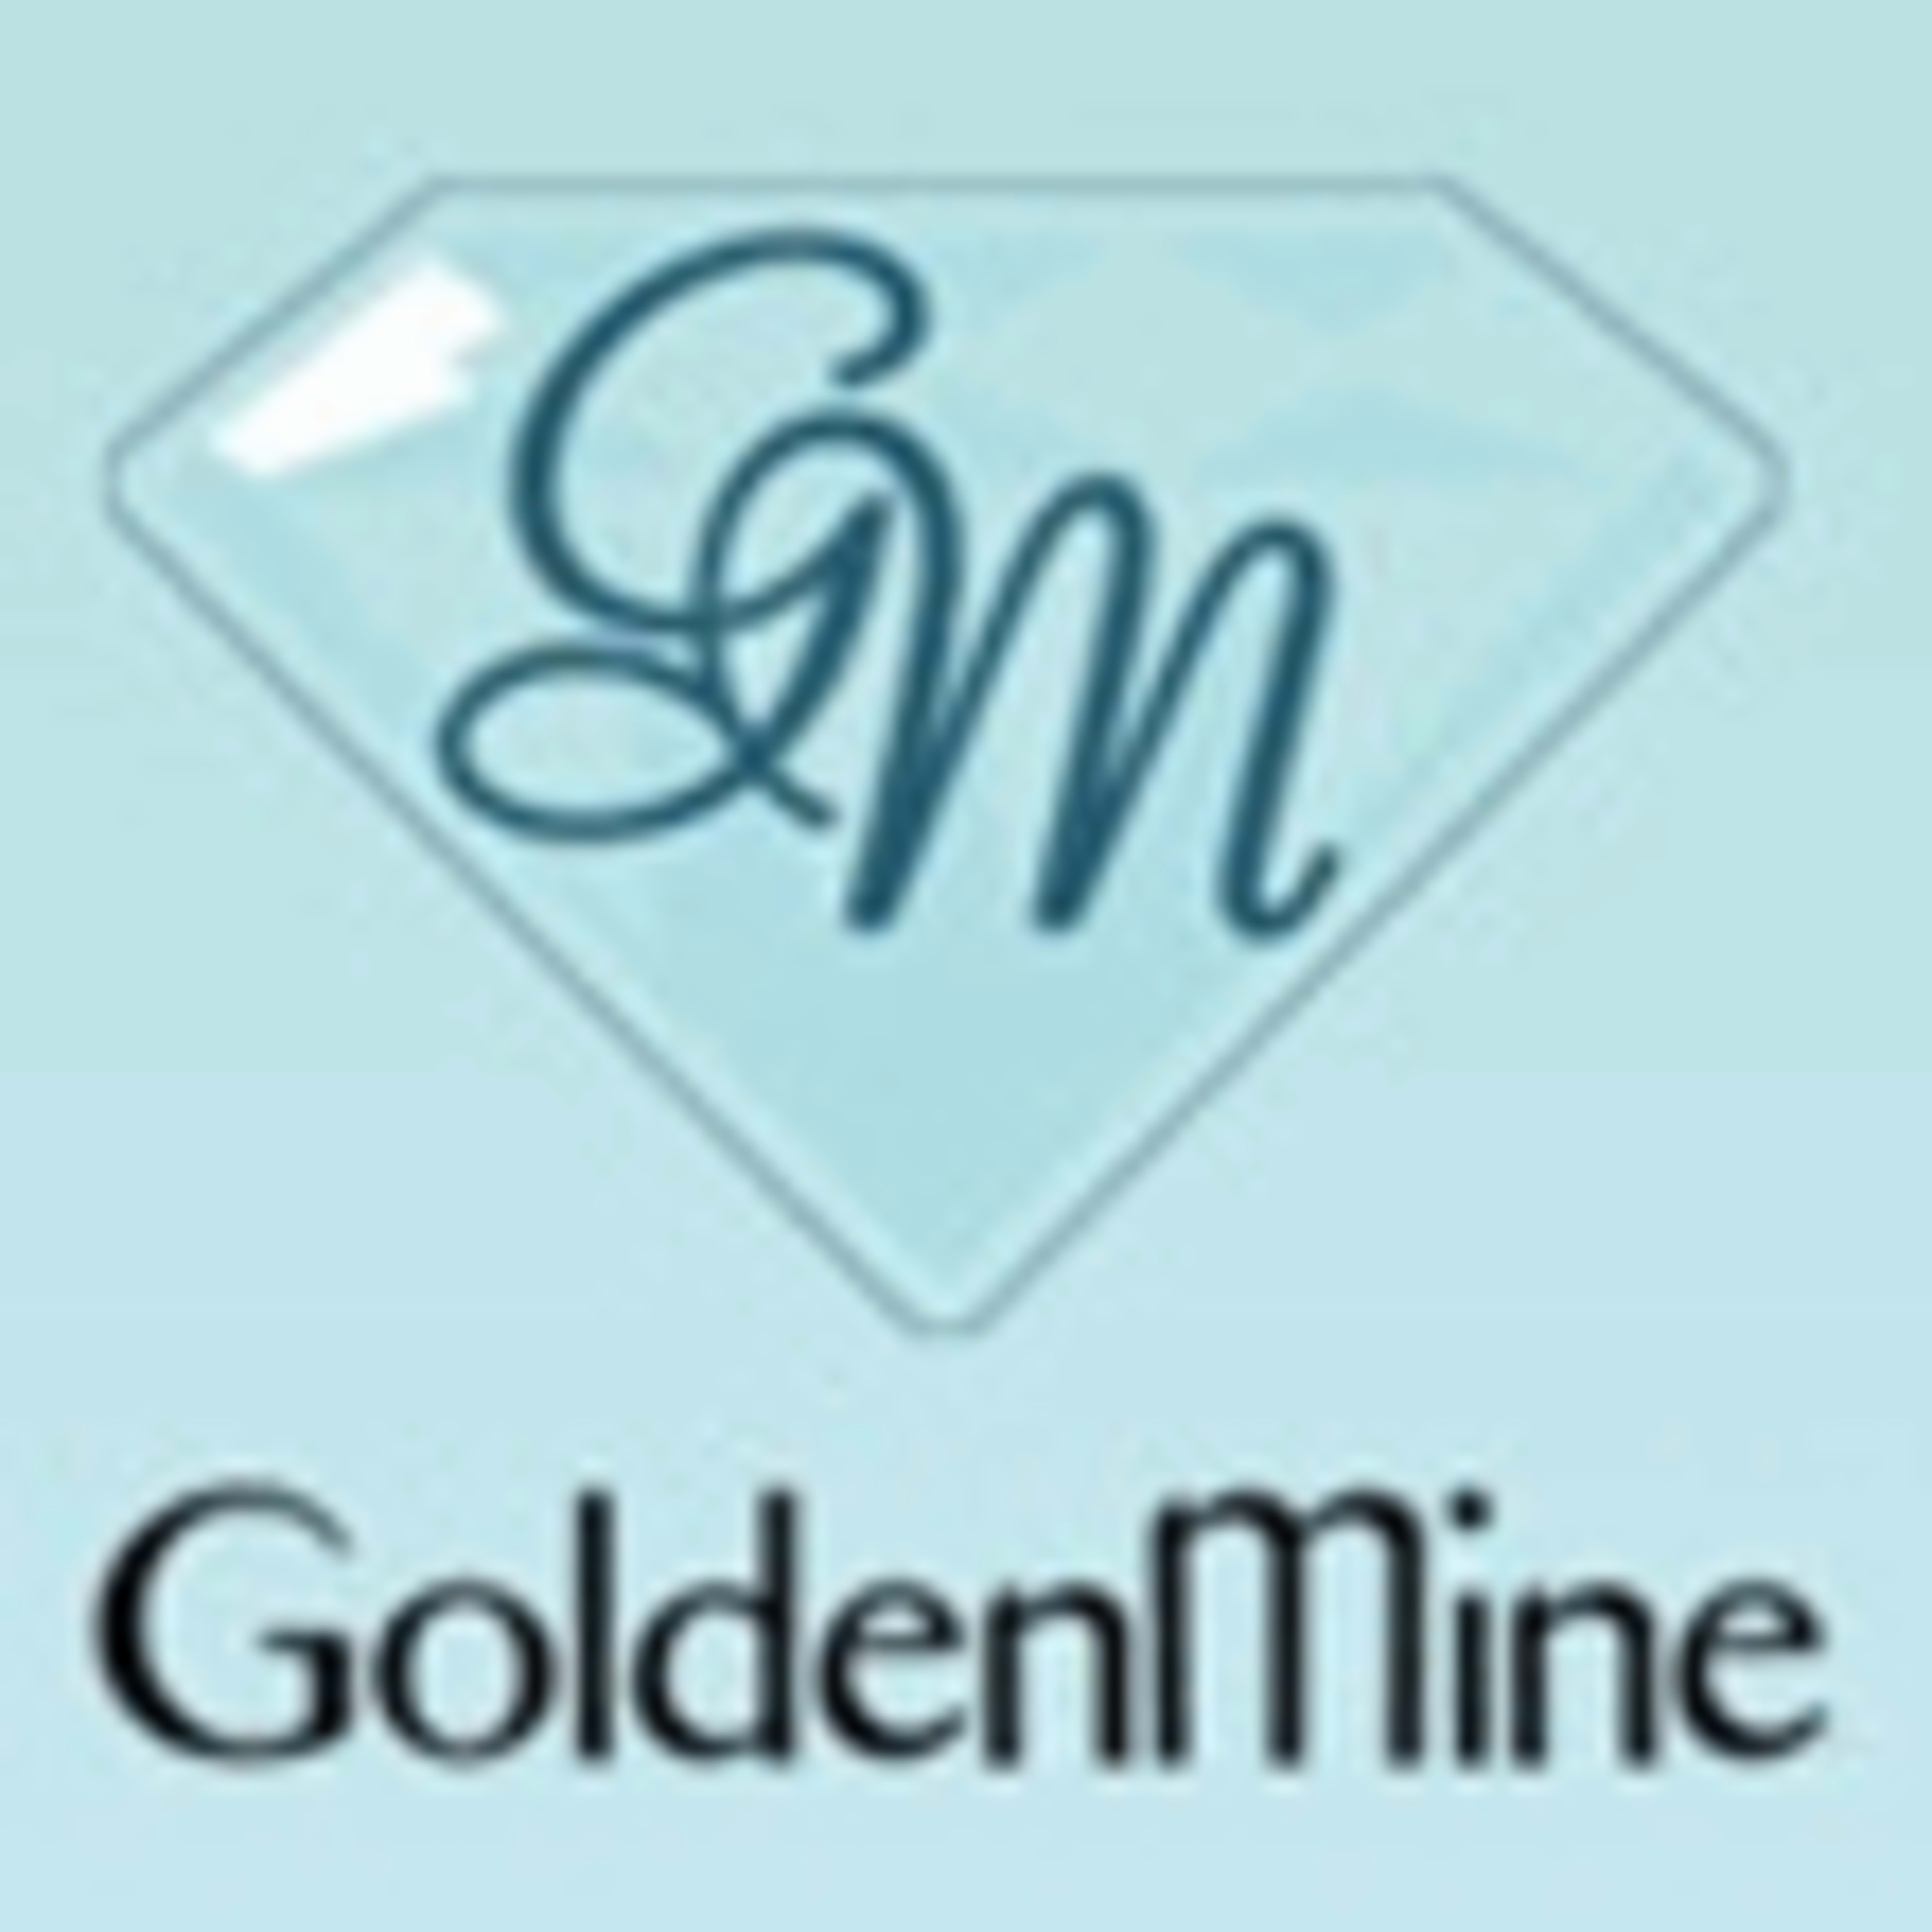 GoldenMine Code